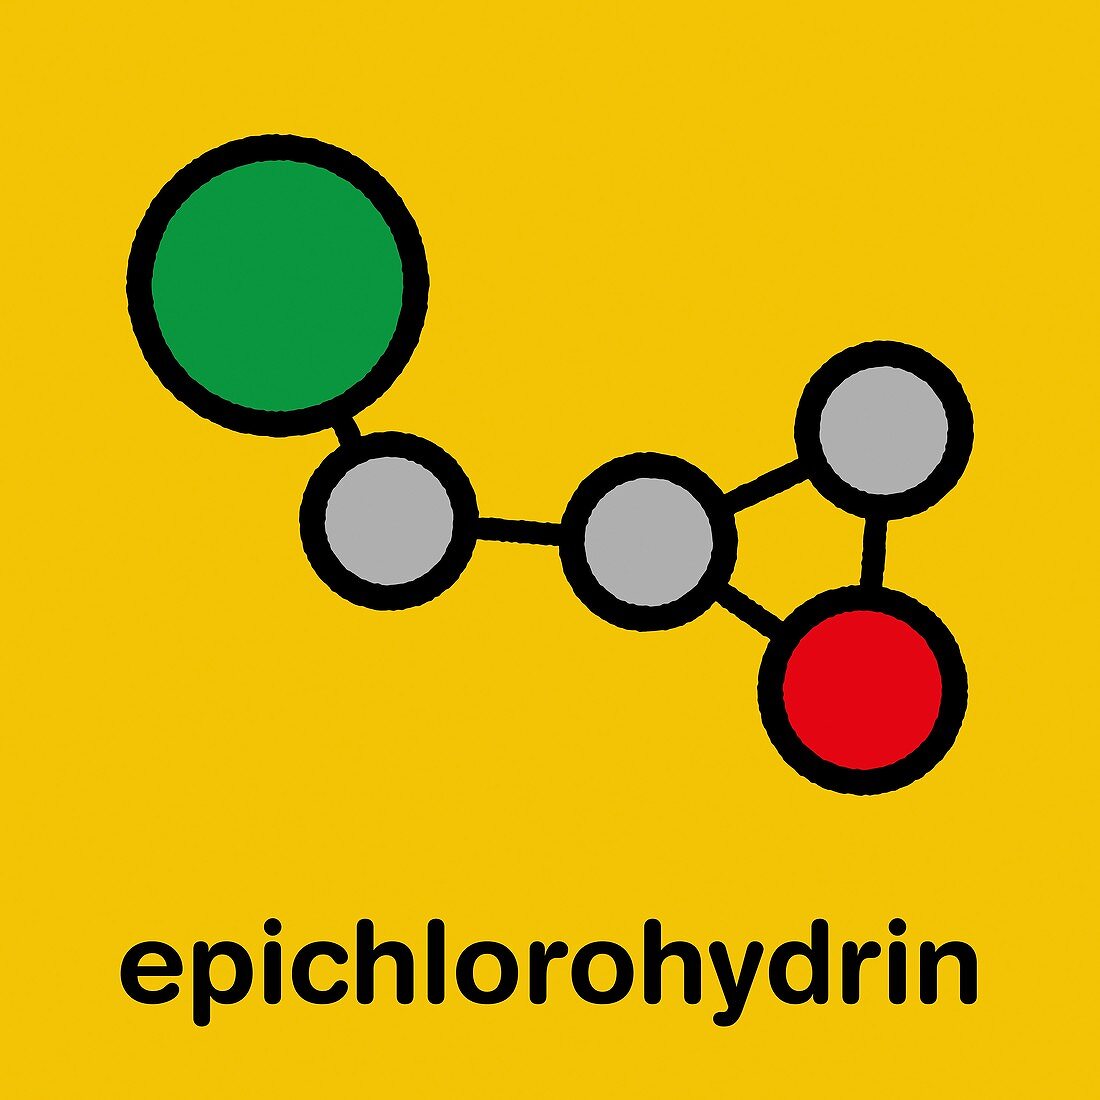 Epichlorohydrin epoxy resin building block, illustration